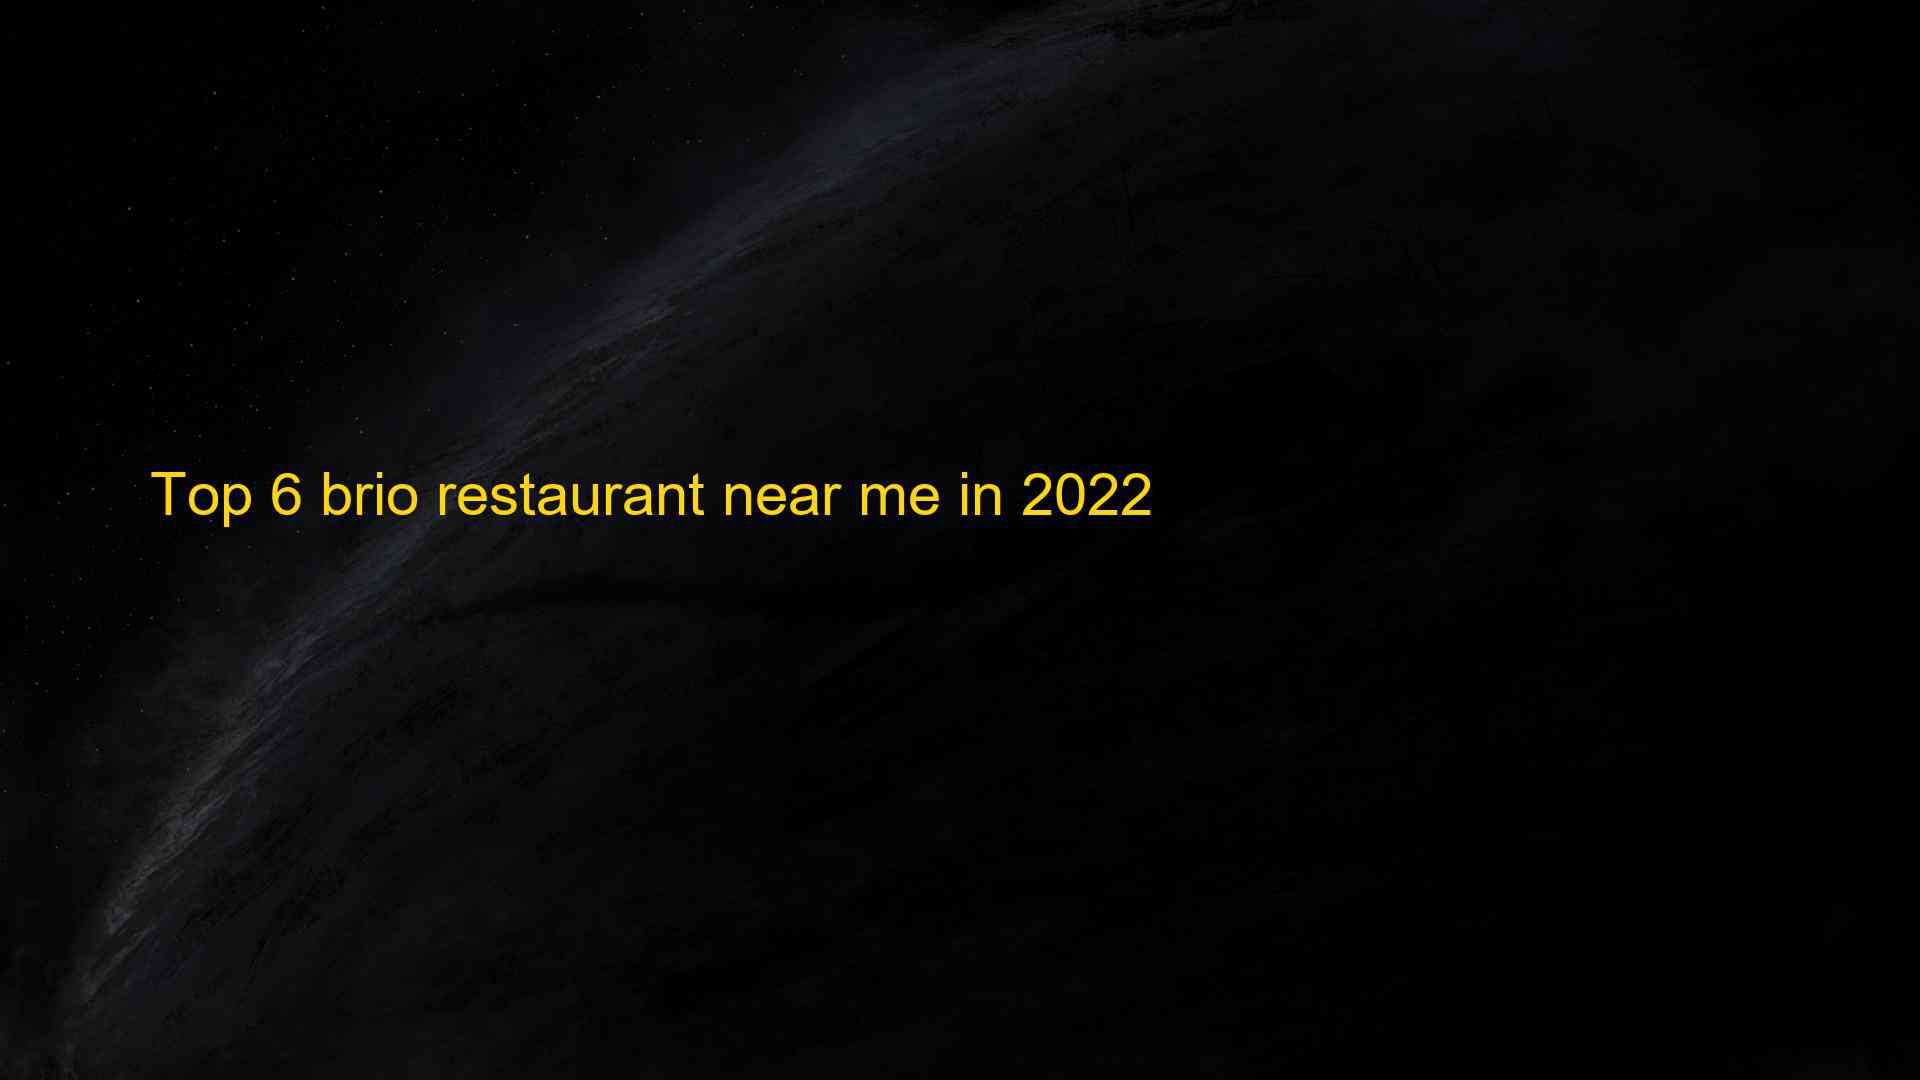 Top 6 brio restaurant near me in 2022 1663520381